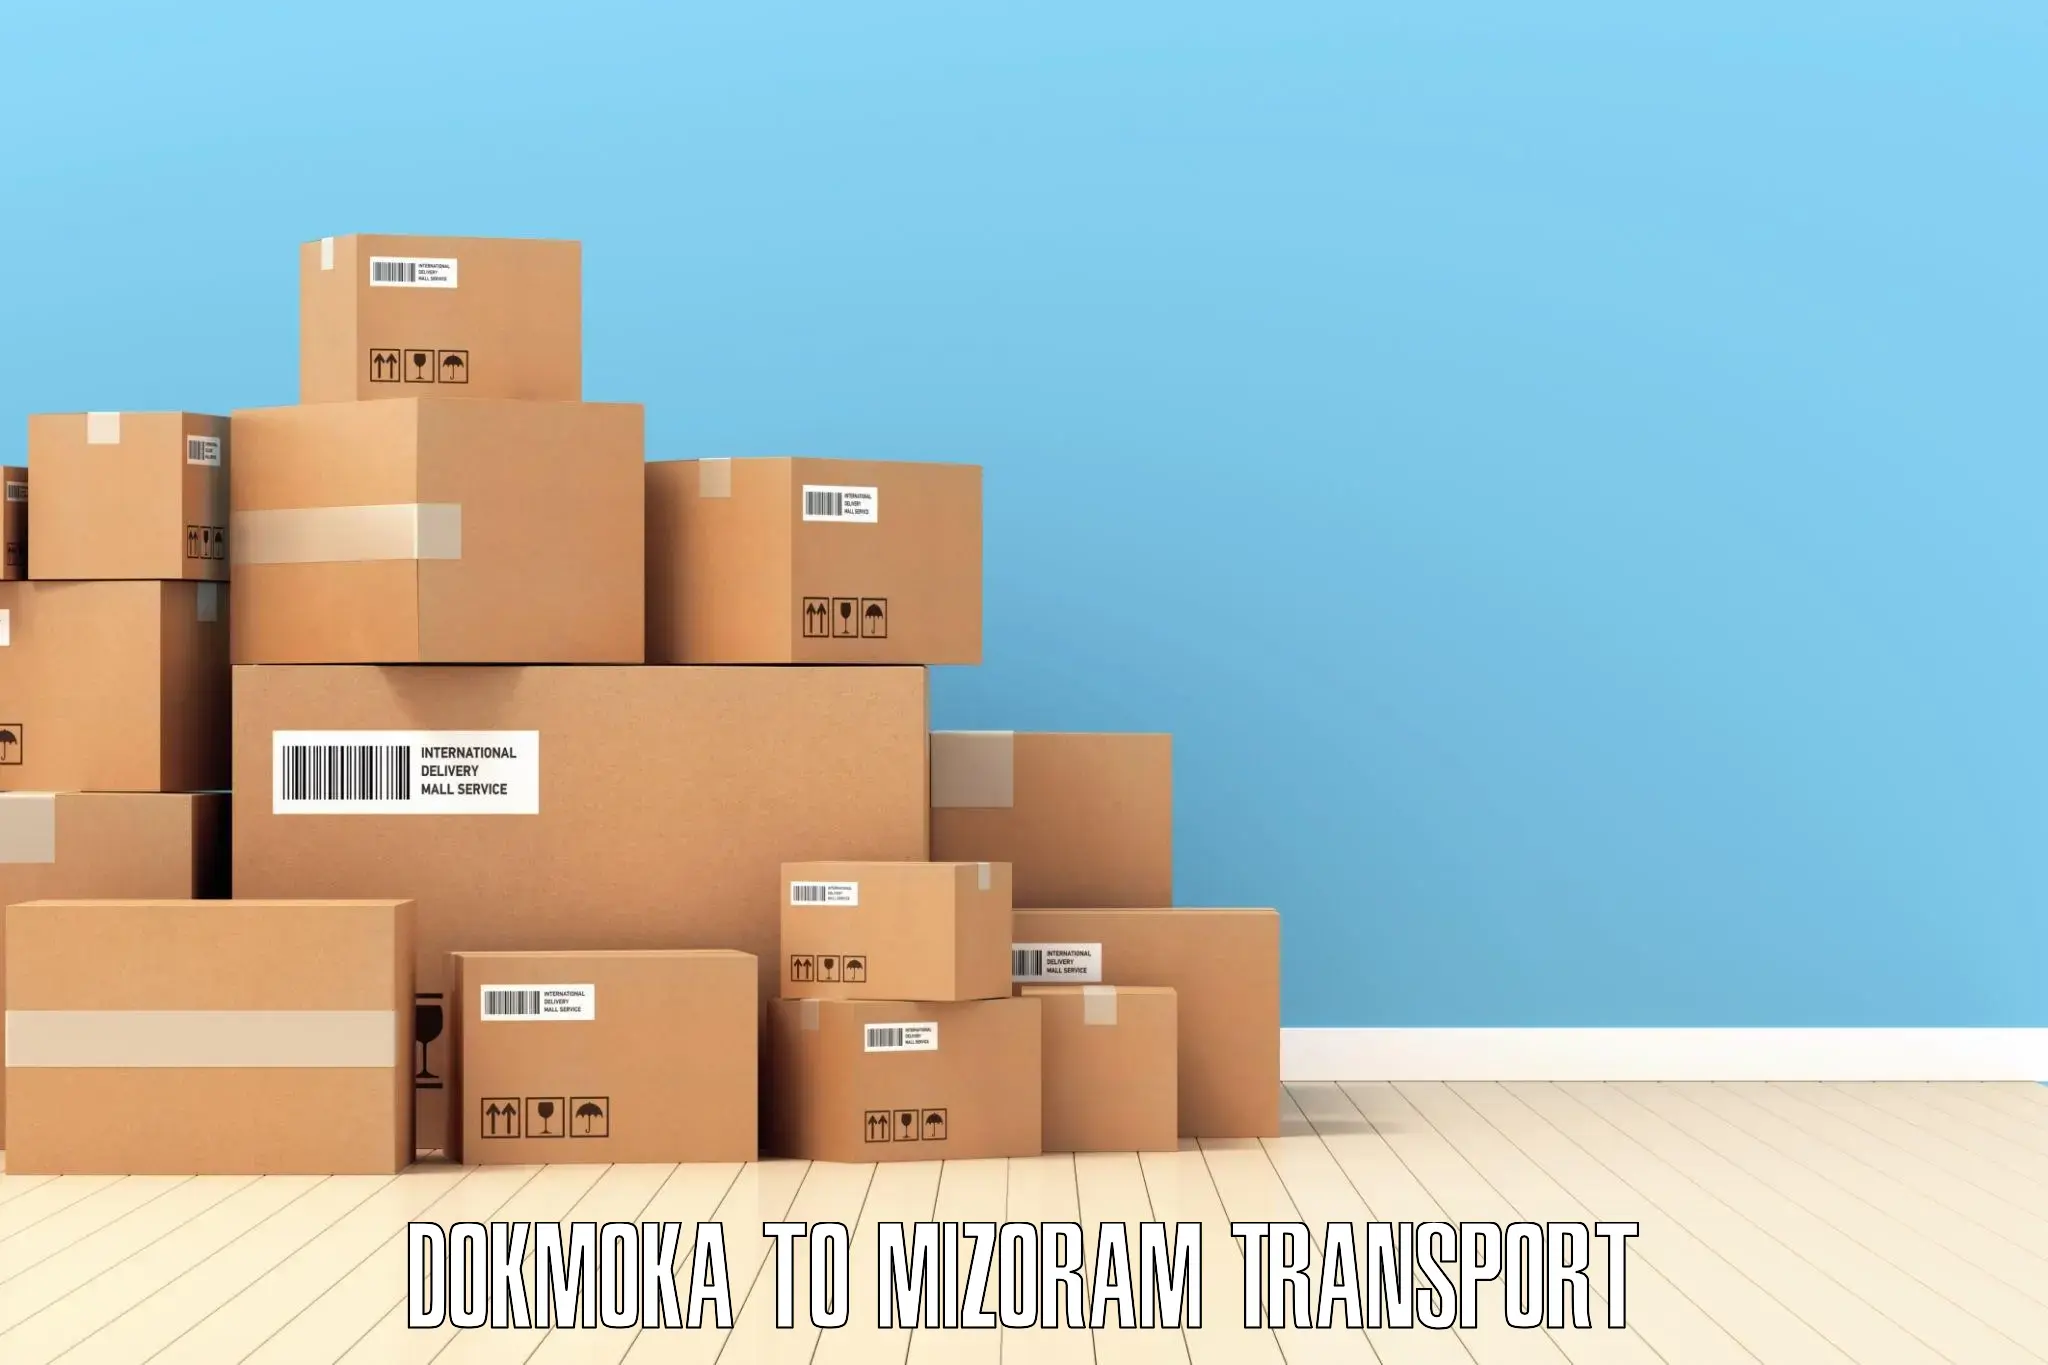 Domestic goods transportation services Dokmoka to Aizawl